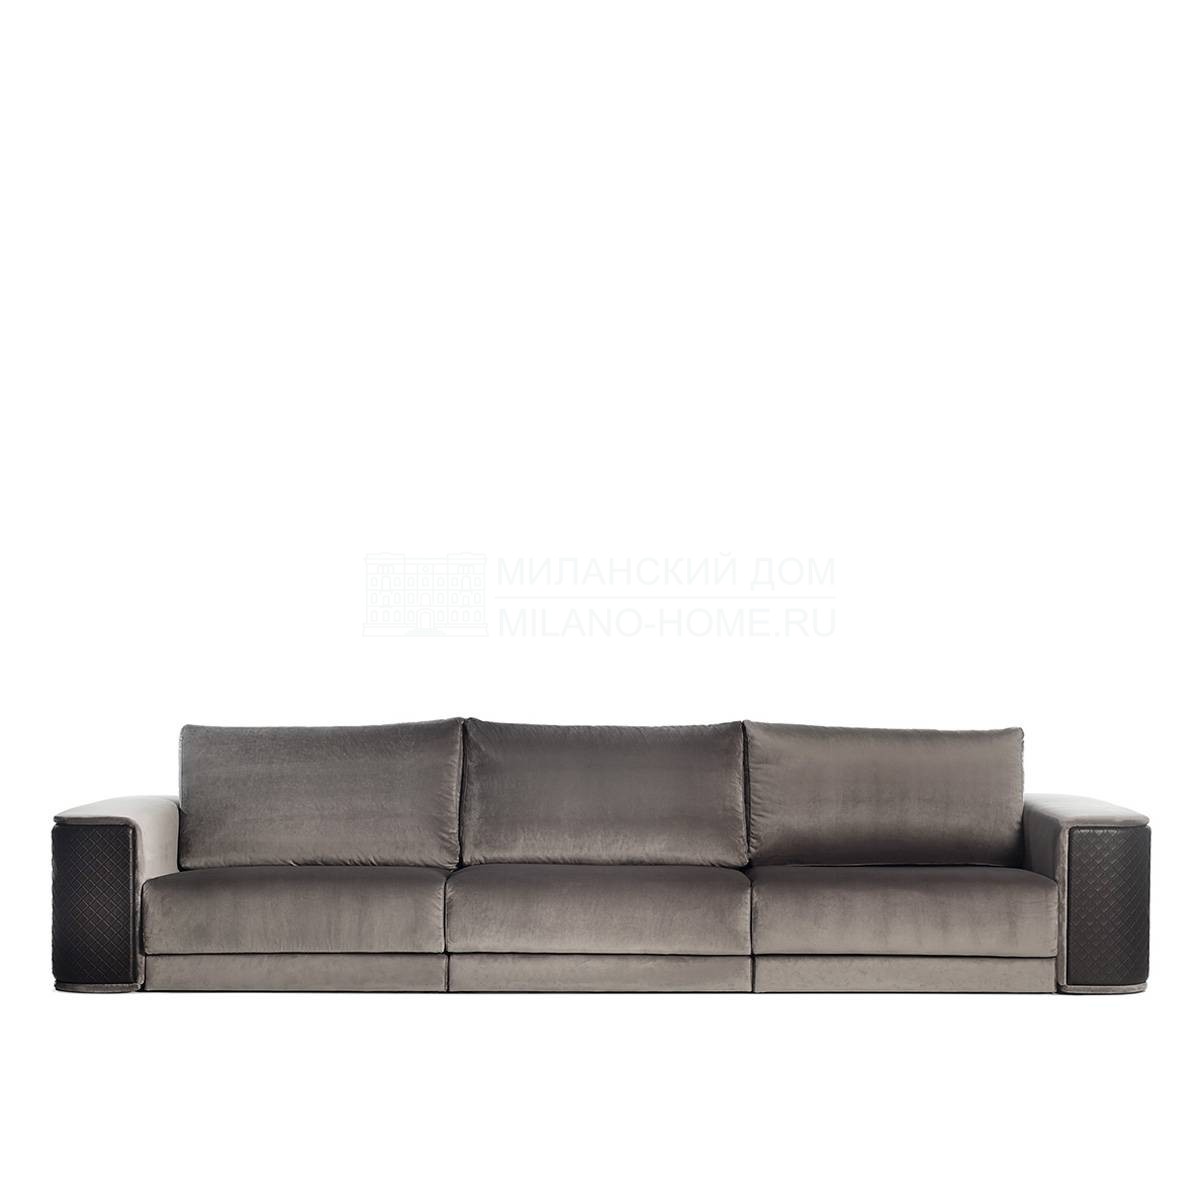 Прямой диван Master sofa из Испании фабрики COLECCION ALEXANDRA